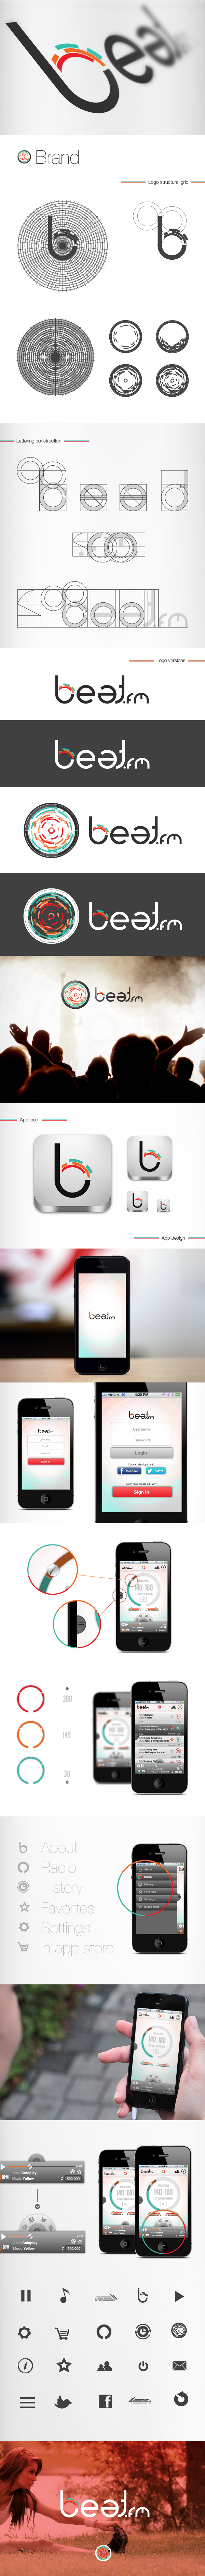 beat.fm BPM iphone radio radio BPM app iphone app Radio